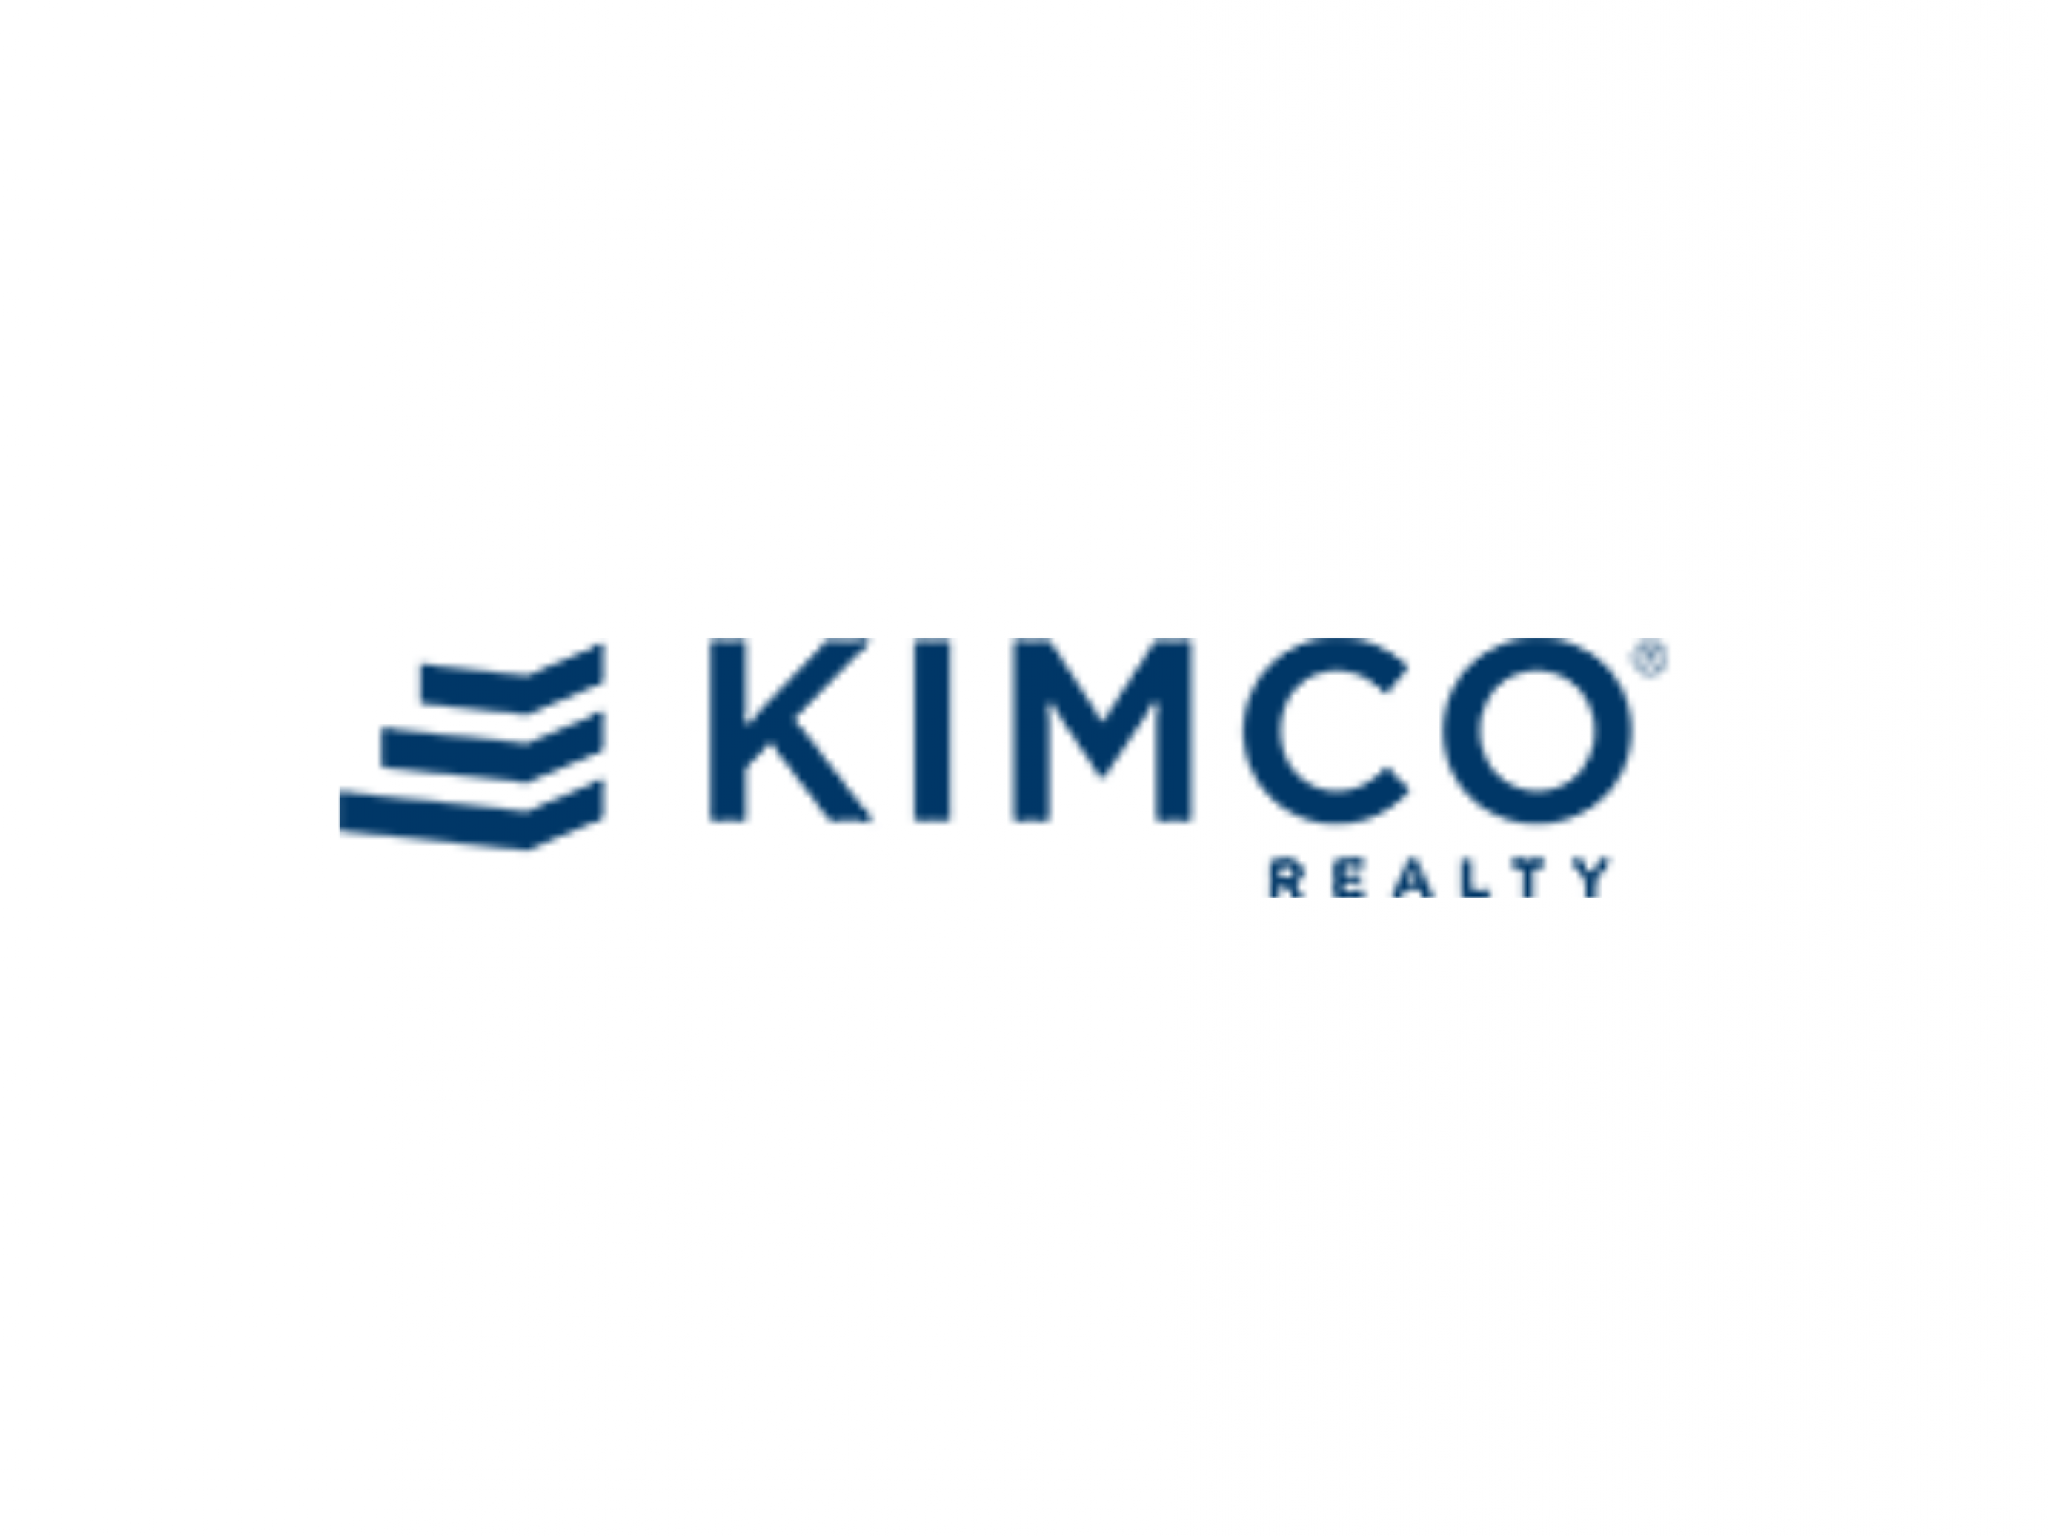  kimco-pens-2b-merger-deal-with-rpt-realty-boosts-coastal-and-sun-belt-markets-footprints 